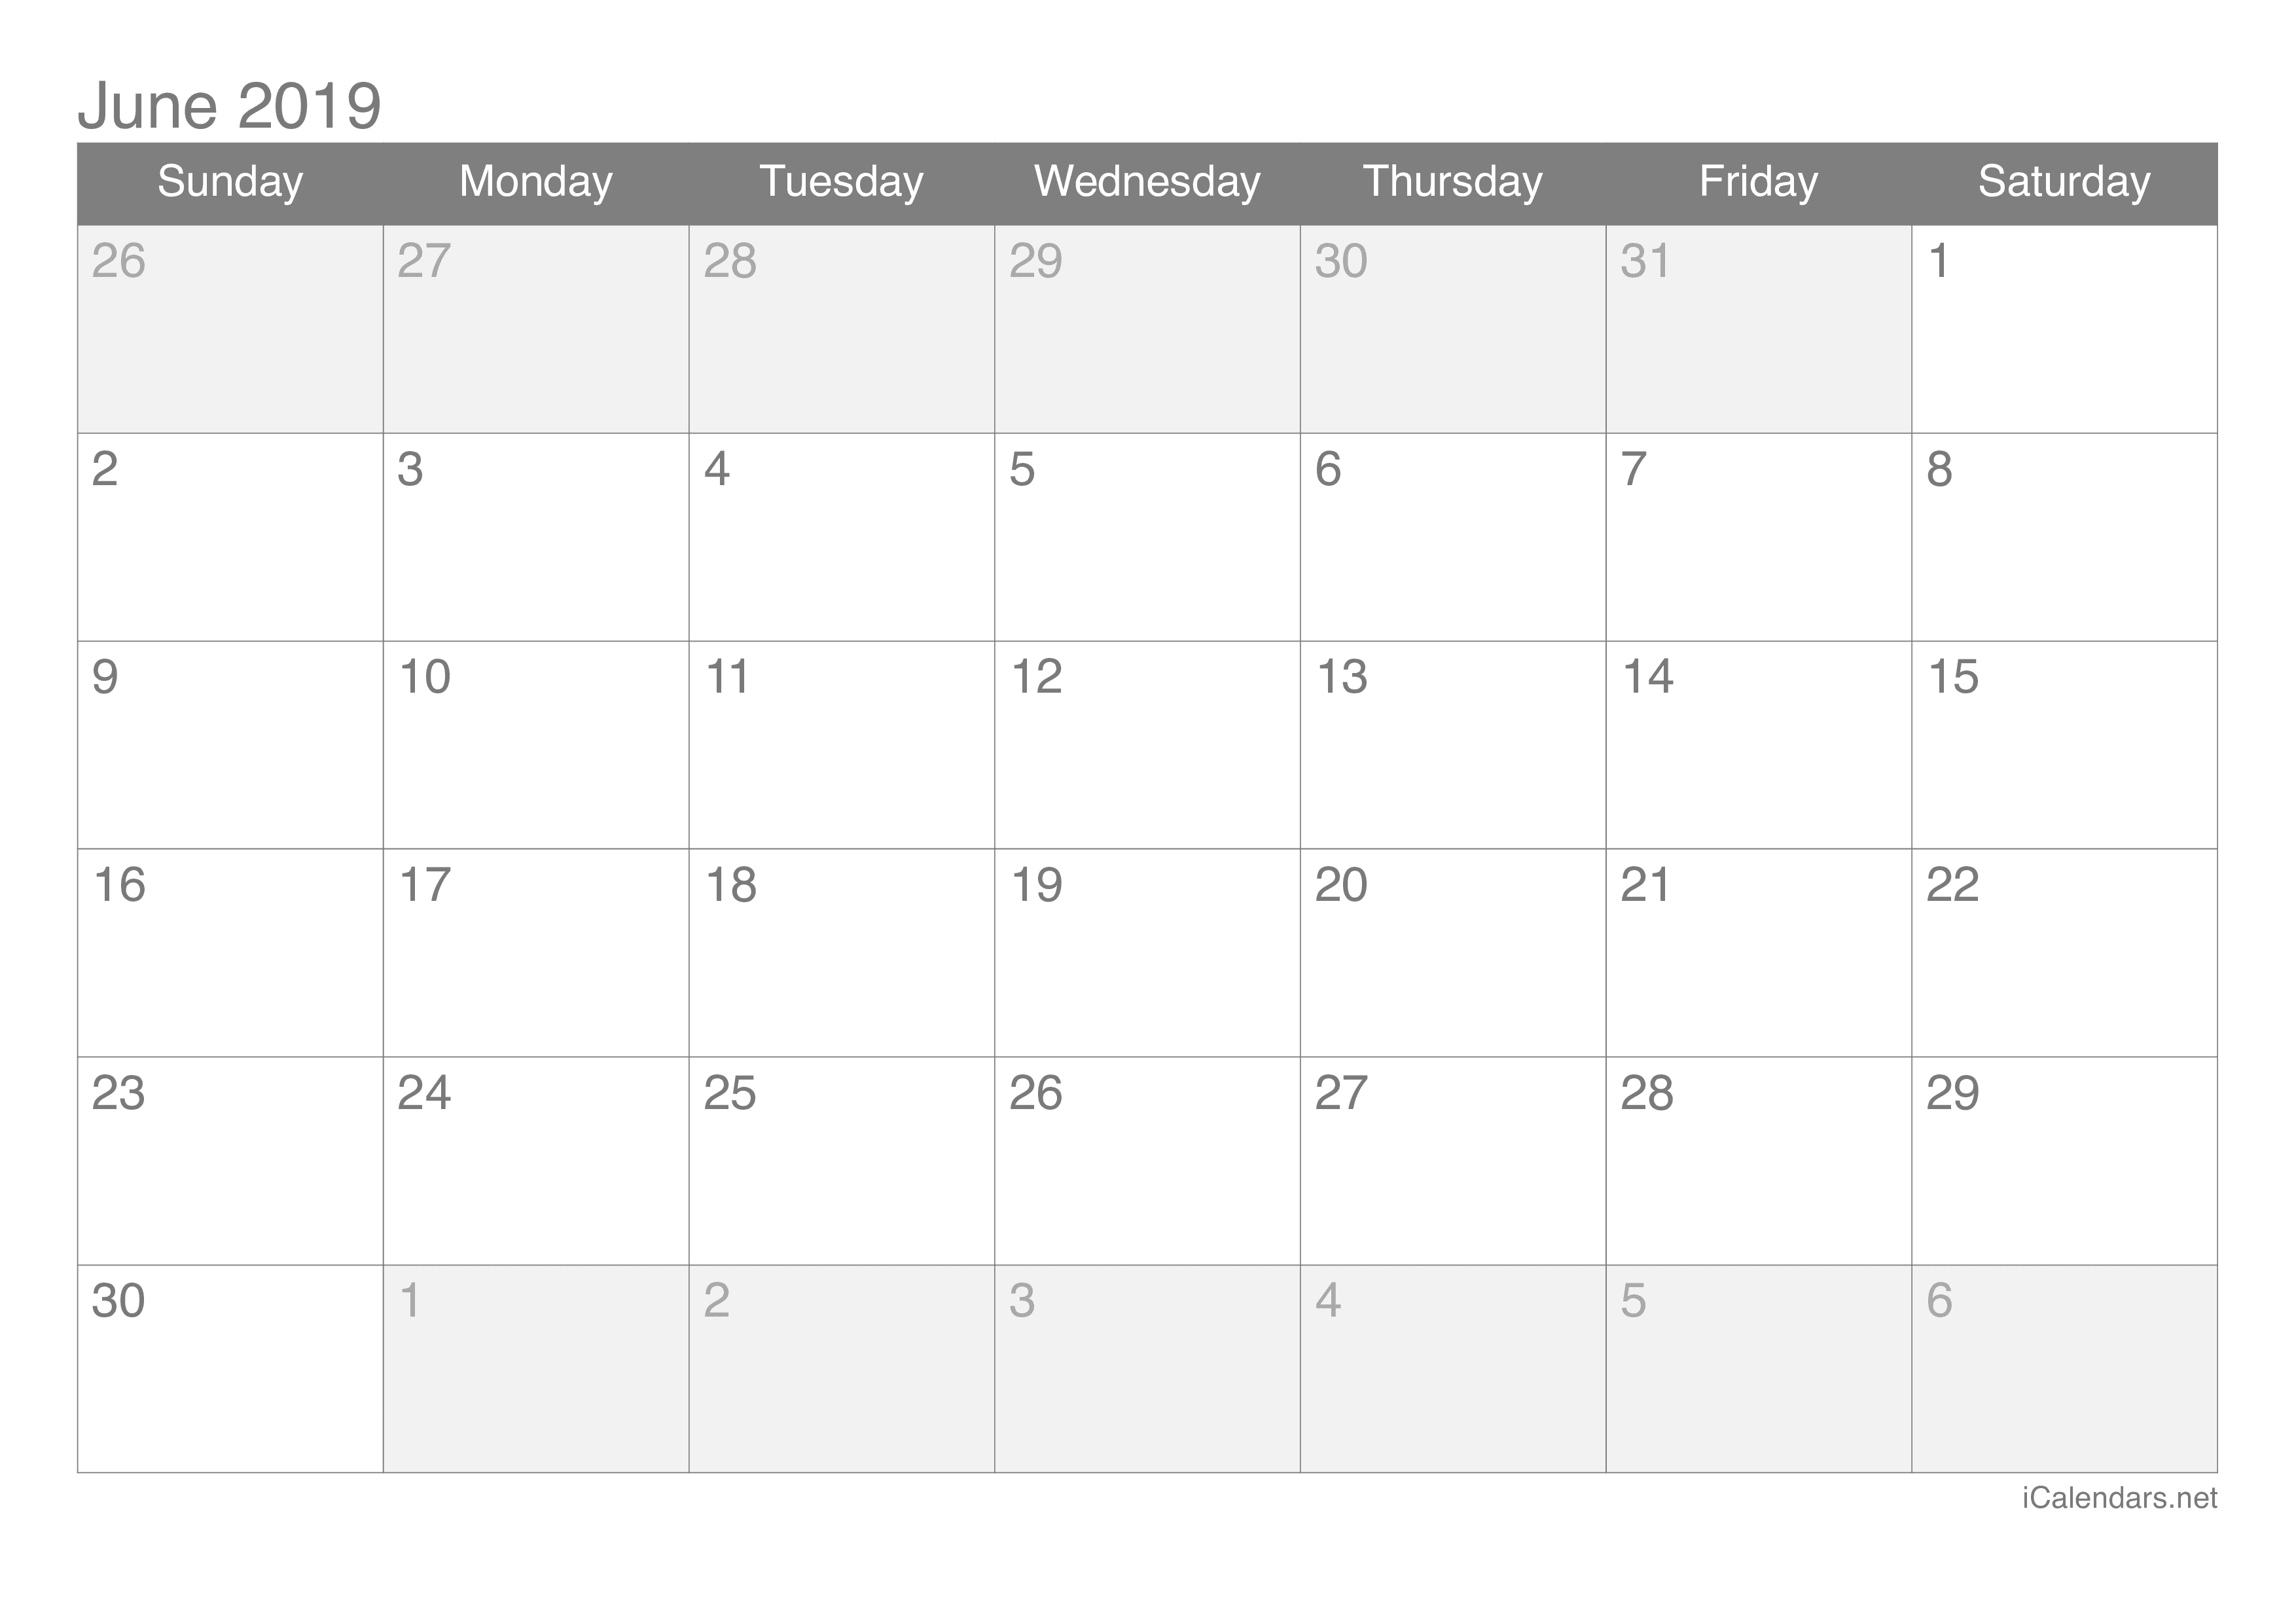 June 2019 Printable Calendar icalendars net